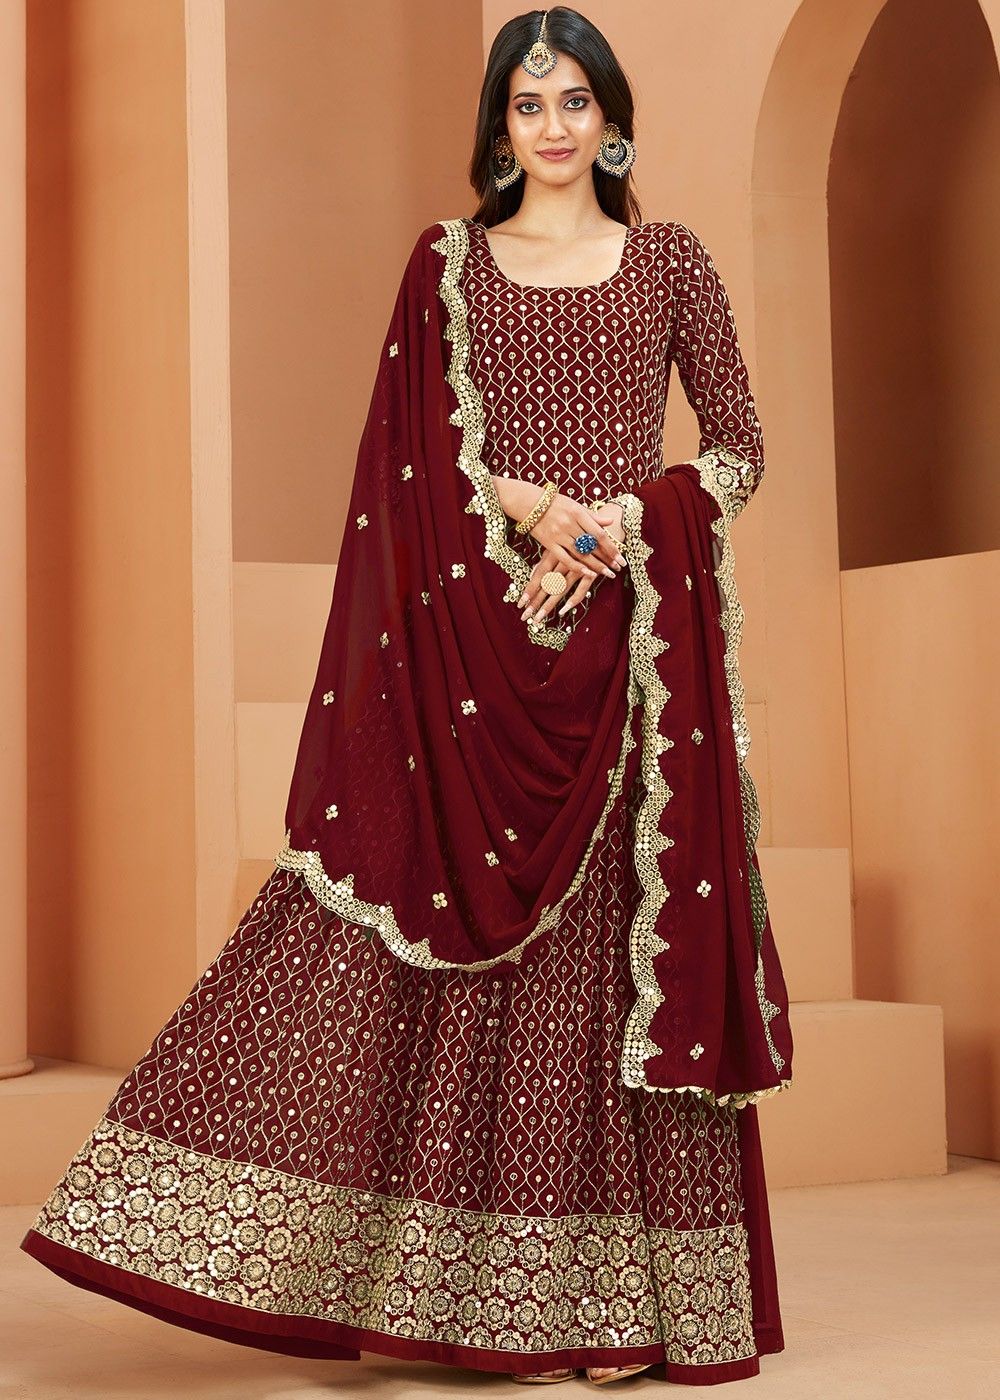 SHAFNUFAB® Women's Georgette Semi Stitched Anarkali Salwar Suit (wedding  dress and salwar suit_SF20162 Green Free Size) : Amazon.in: Fashion